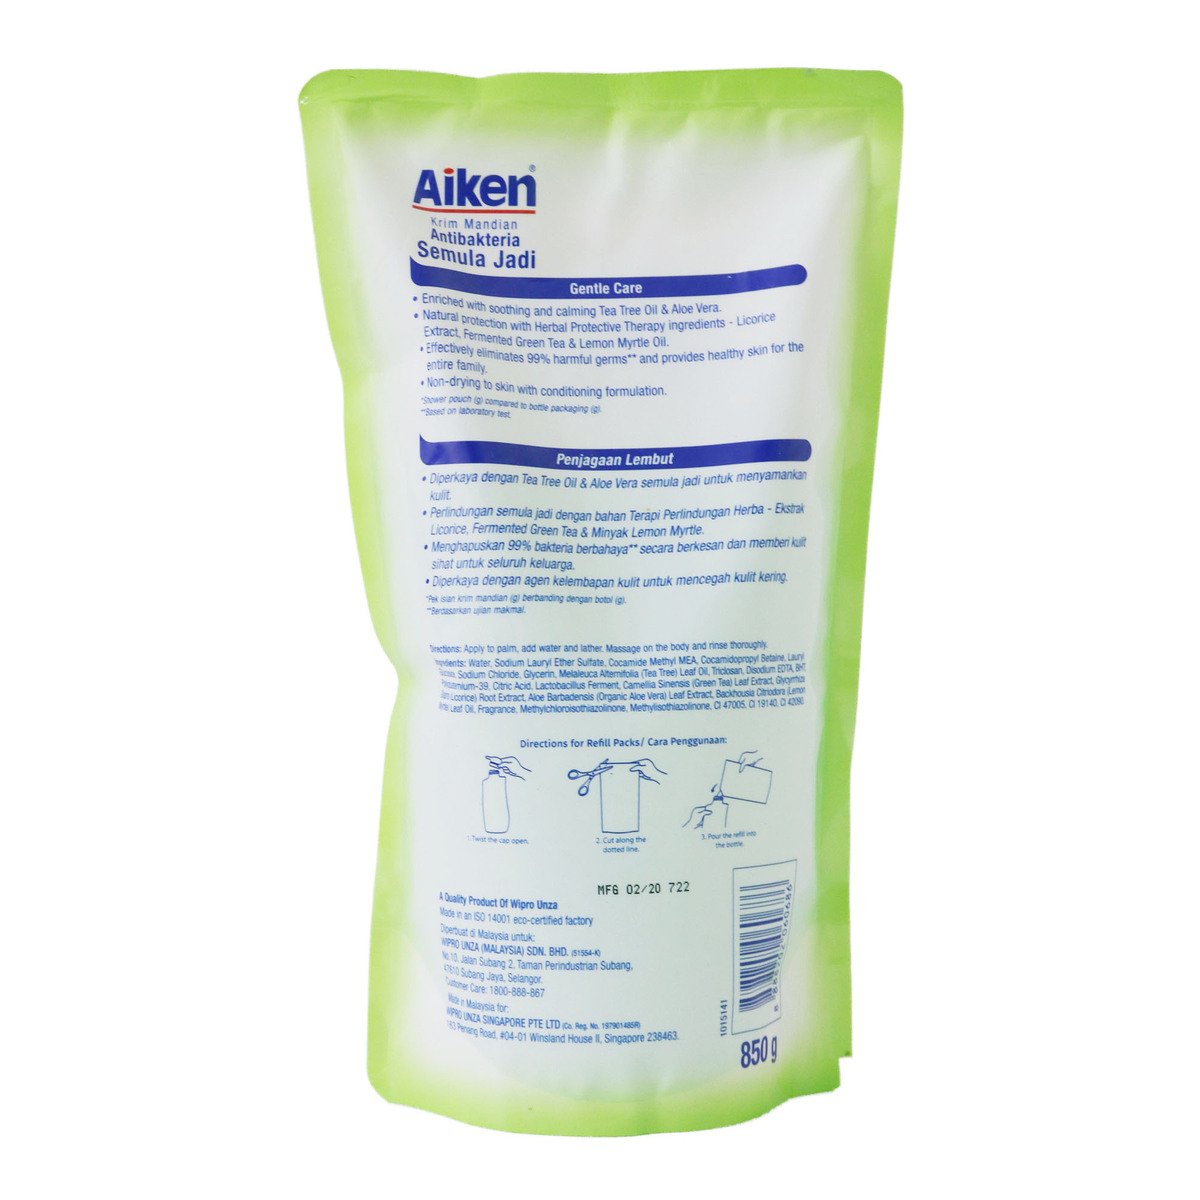 Aiken Antibacterial Shower Cream Protect & Care Refill Pack 850g